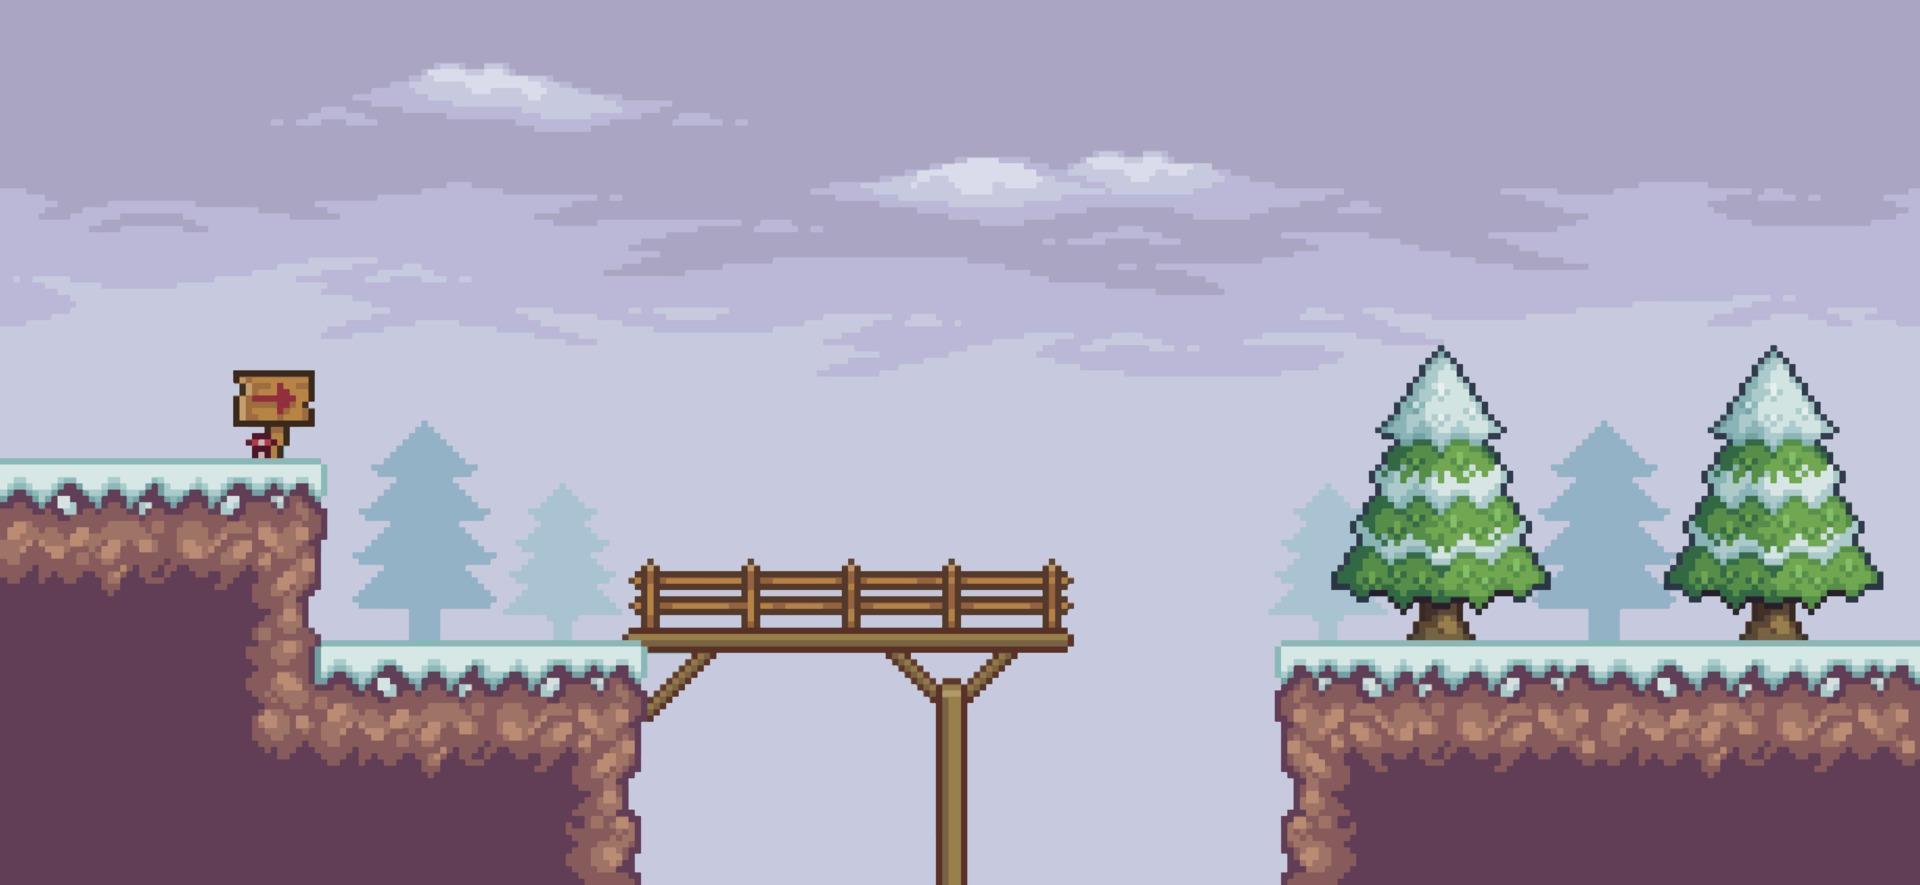 Pixel art game scene in snow pine trees, wood bridge, indicative board 8bit background vector